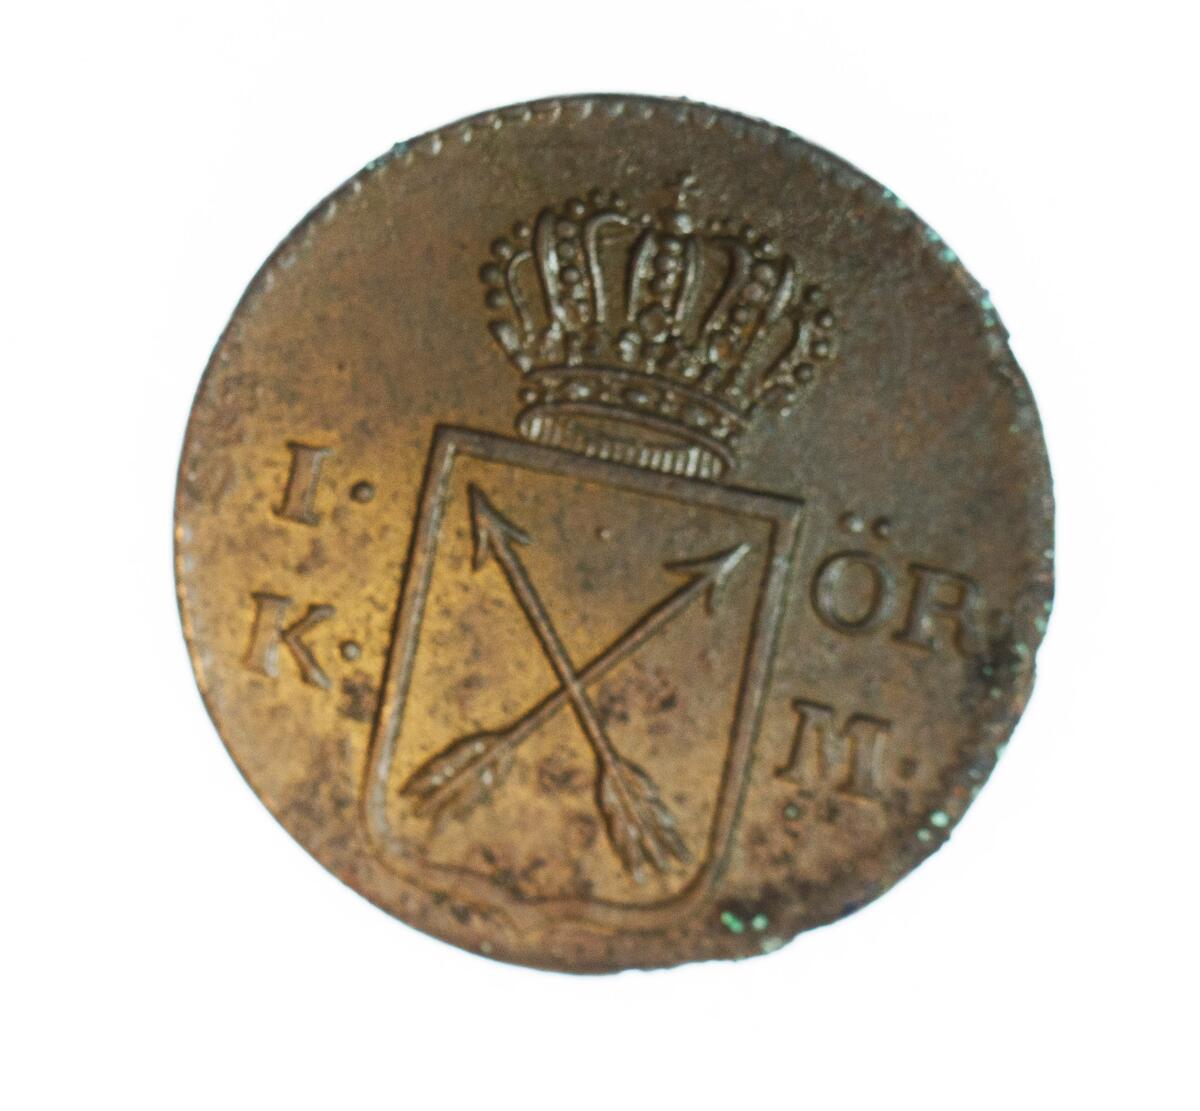 Mynt, 1 öre k.m. från Fredrik I tid, 1750